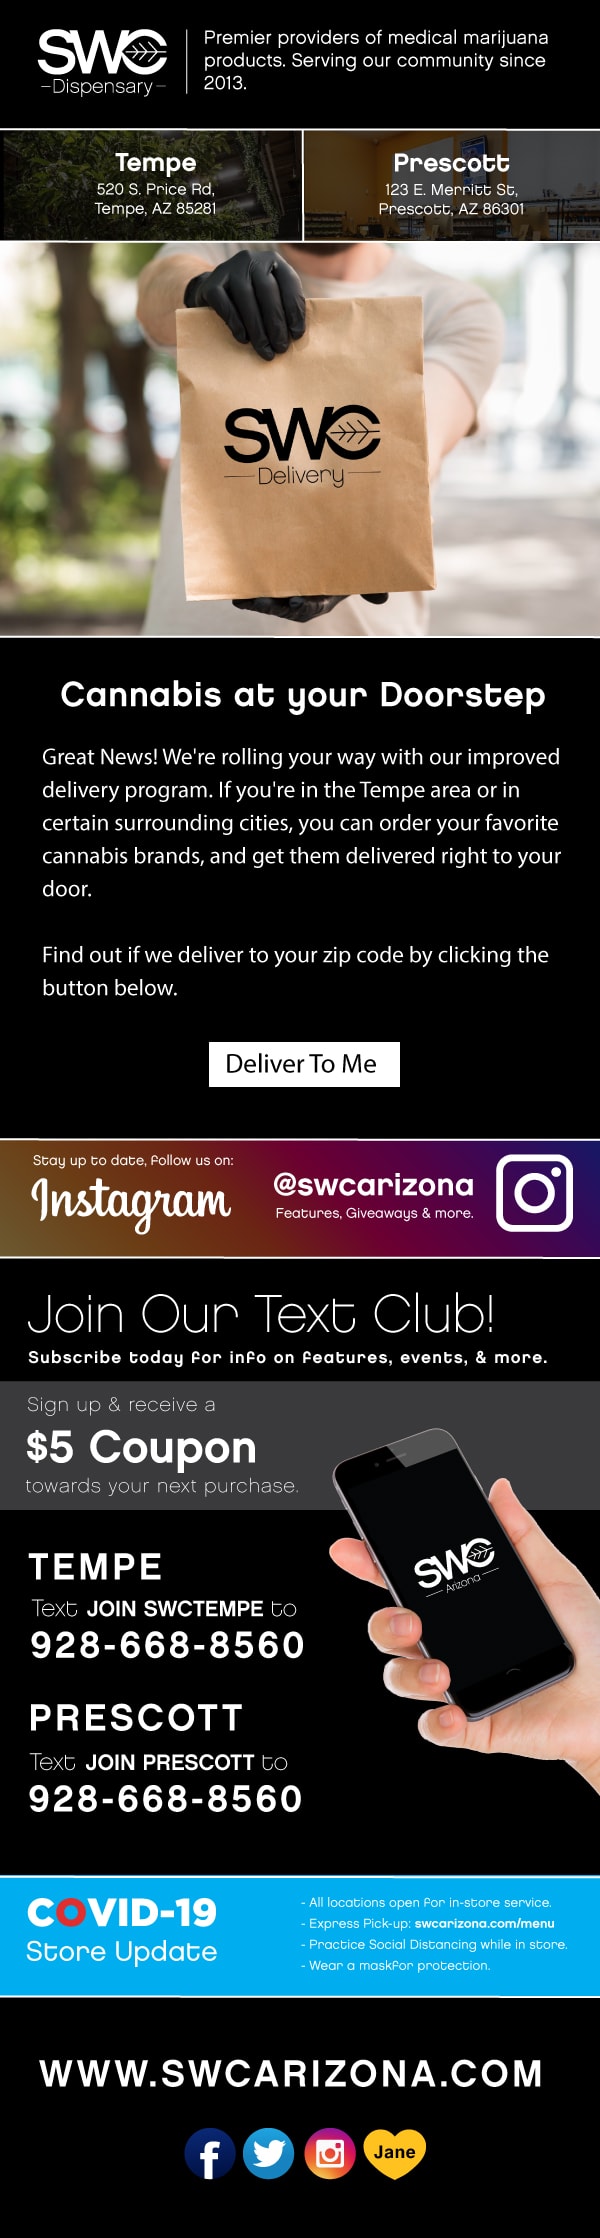 AZ Cannabis Delivery Service